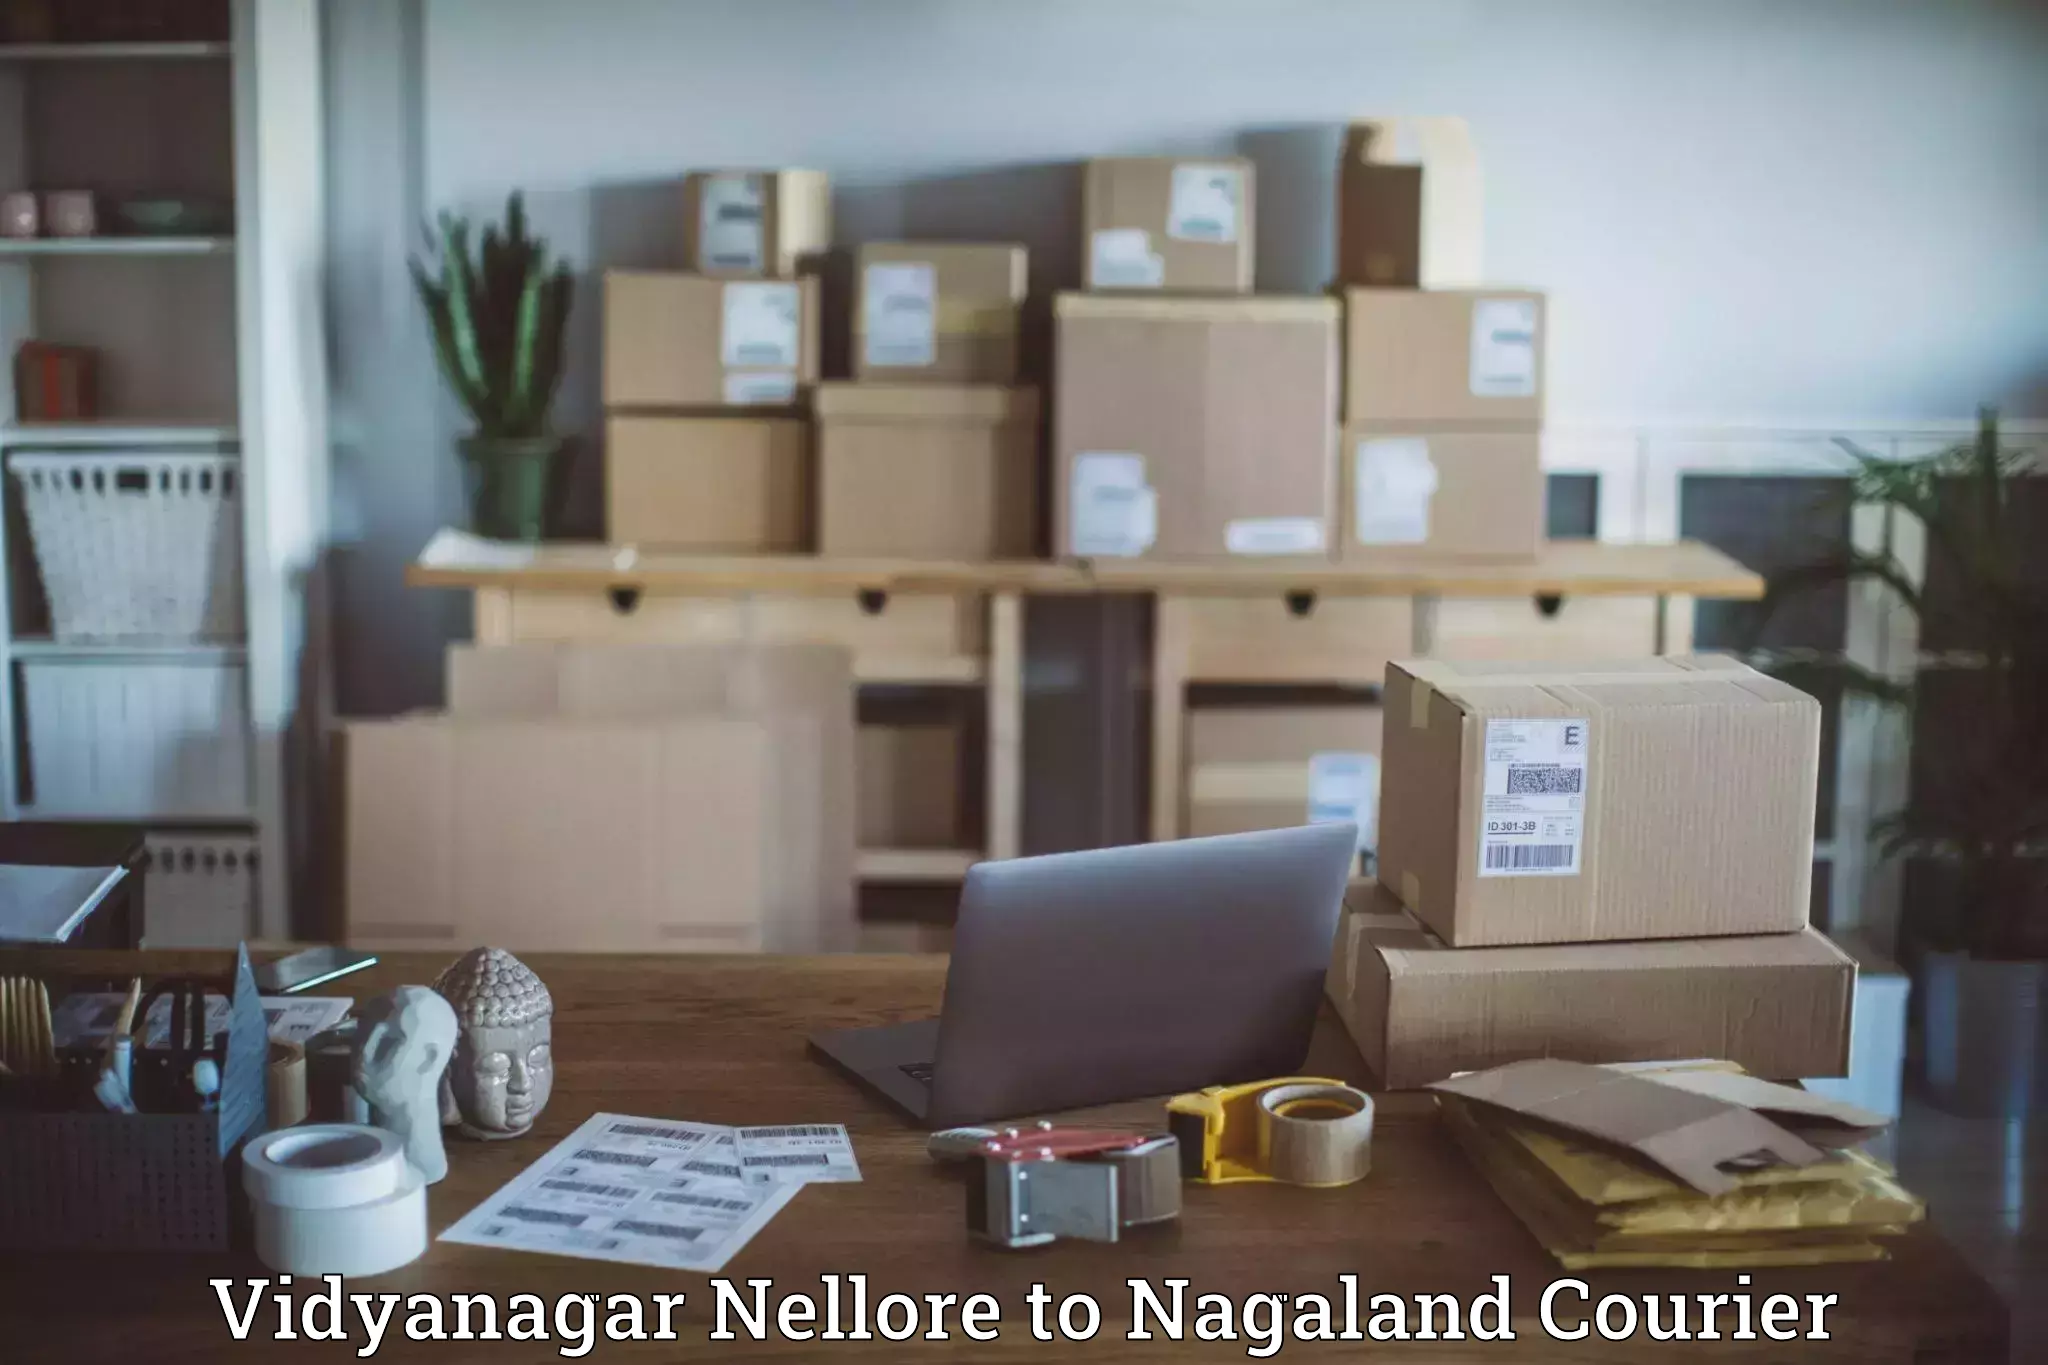 Weekend courier service Vidyanagar Nellore to Nagaland